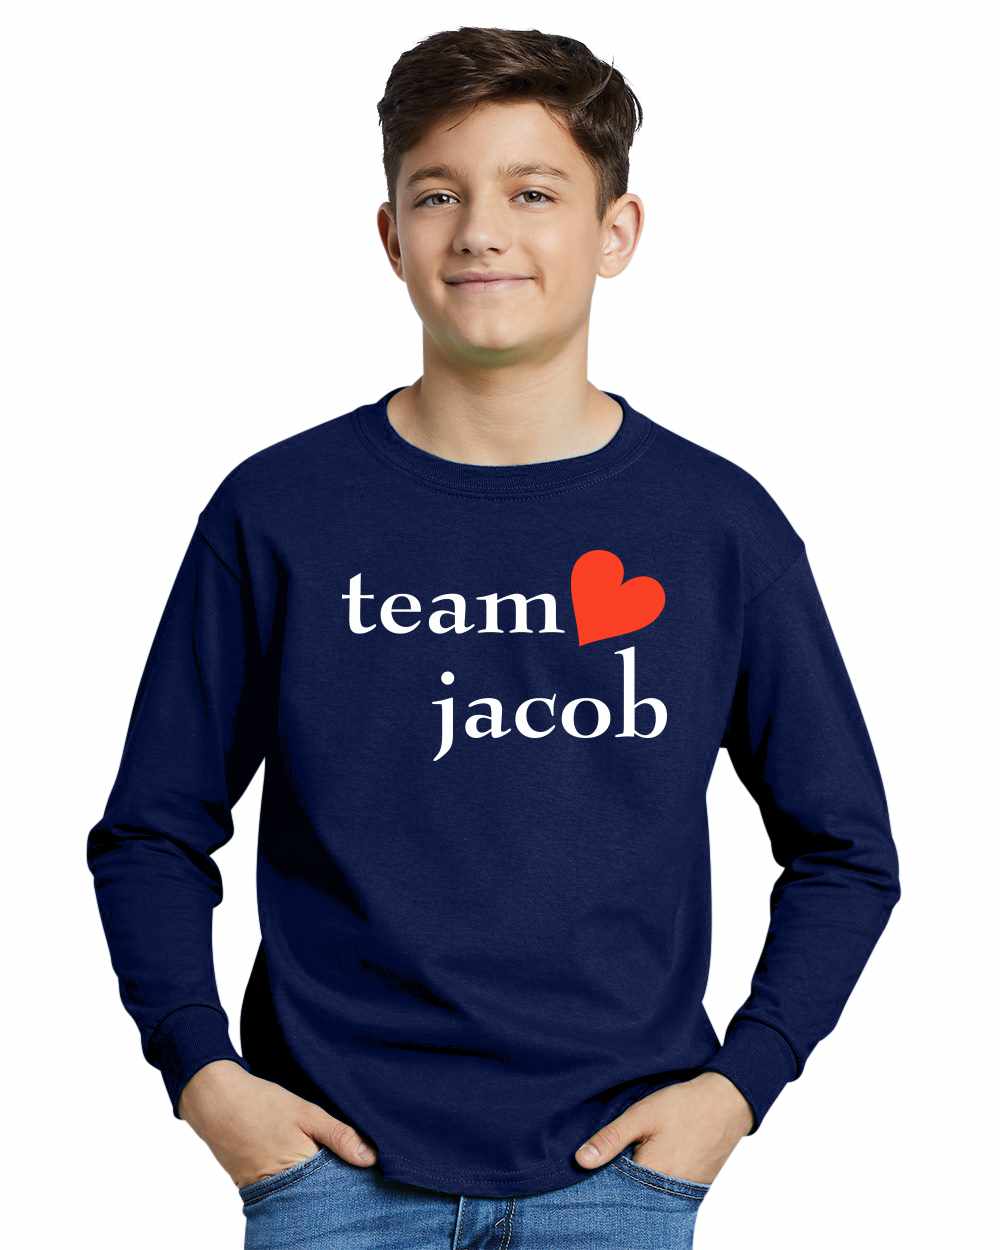 TEAM JACOB on Youth Long Sleeve Shirt